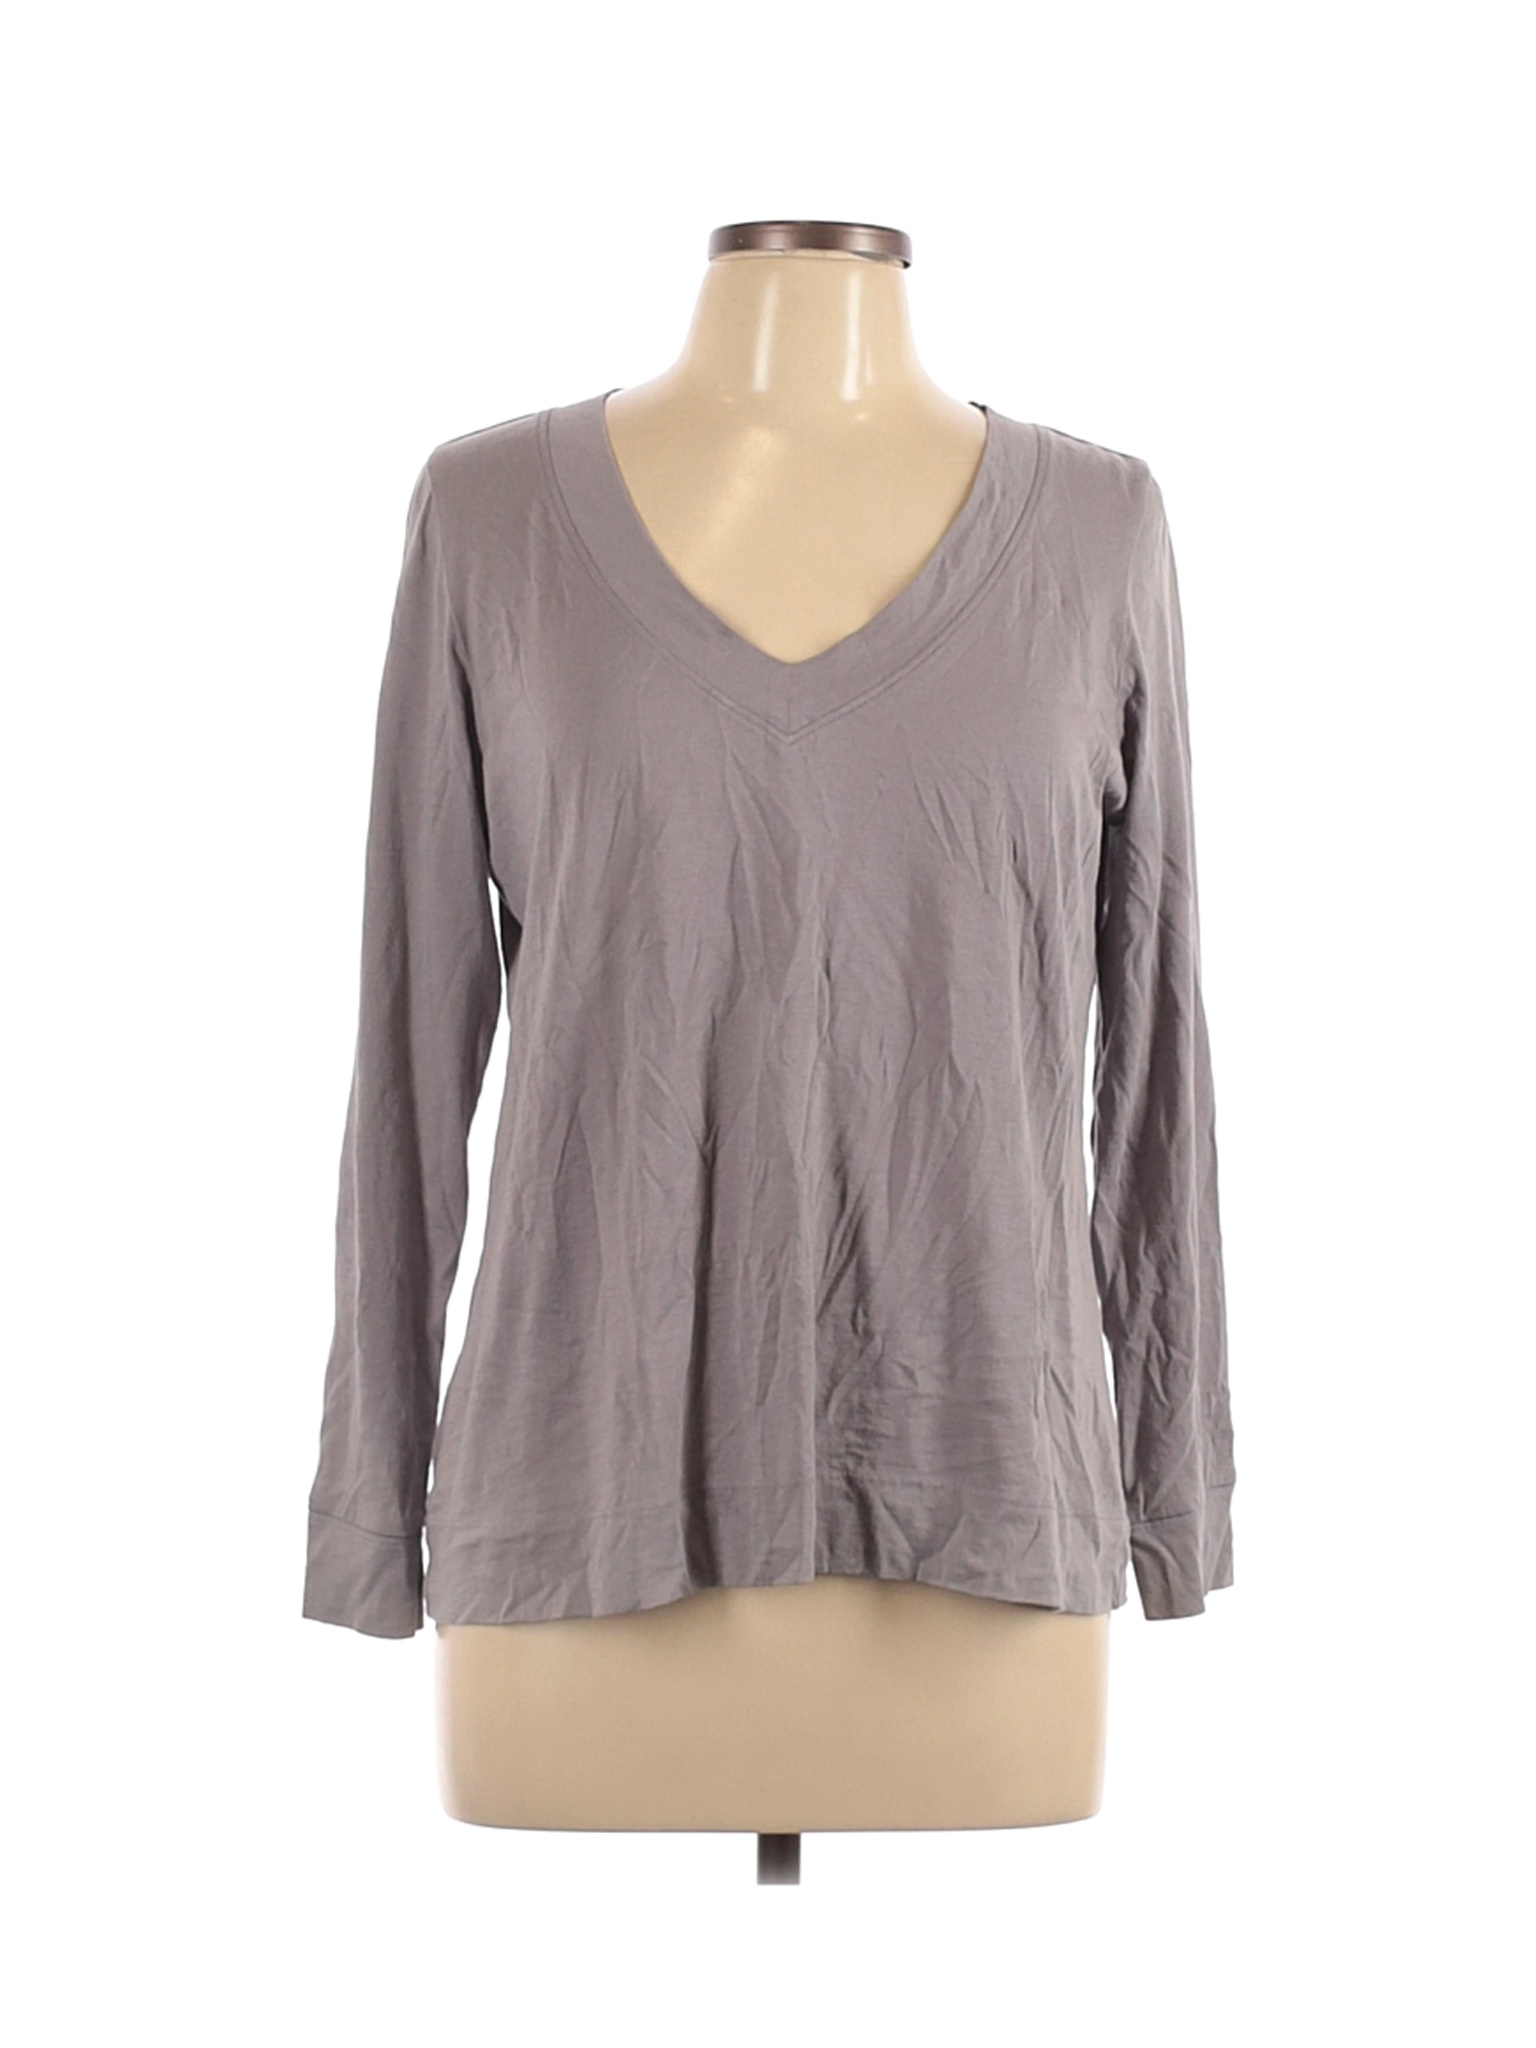 Lili Global Apparel Women Gray Long Sleeve T-Shirt L | eBay